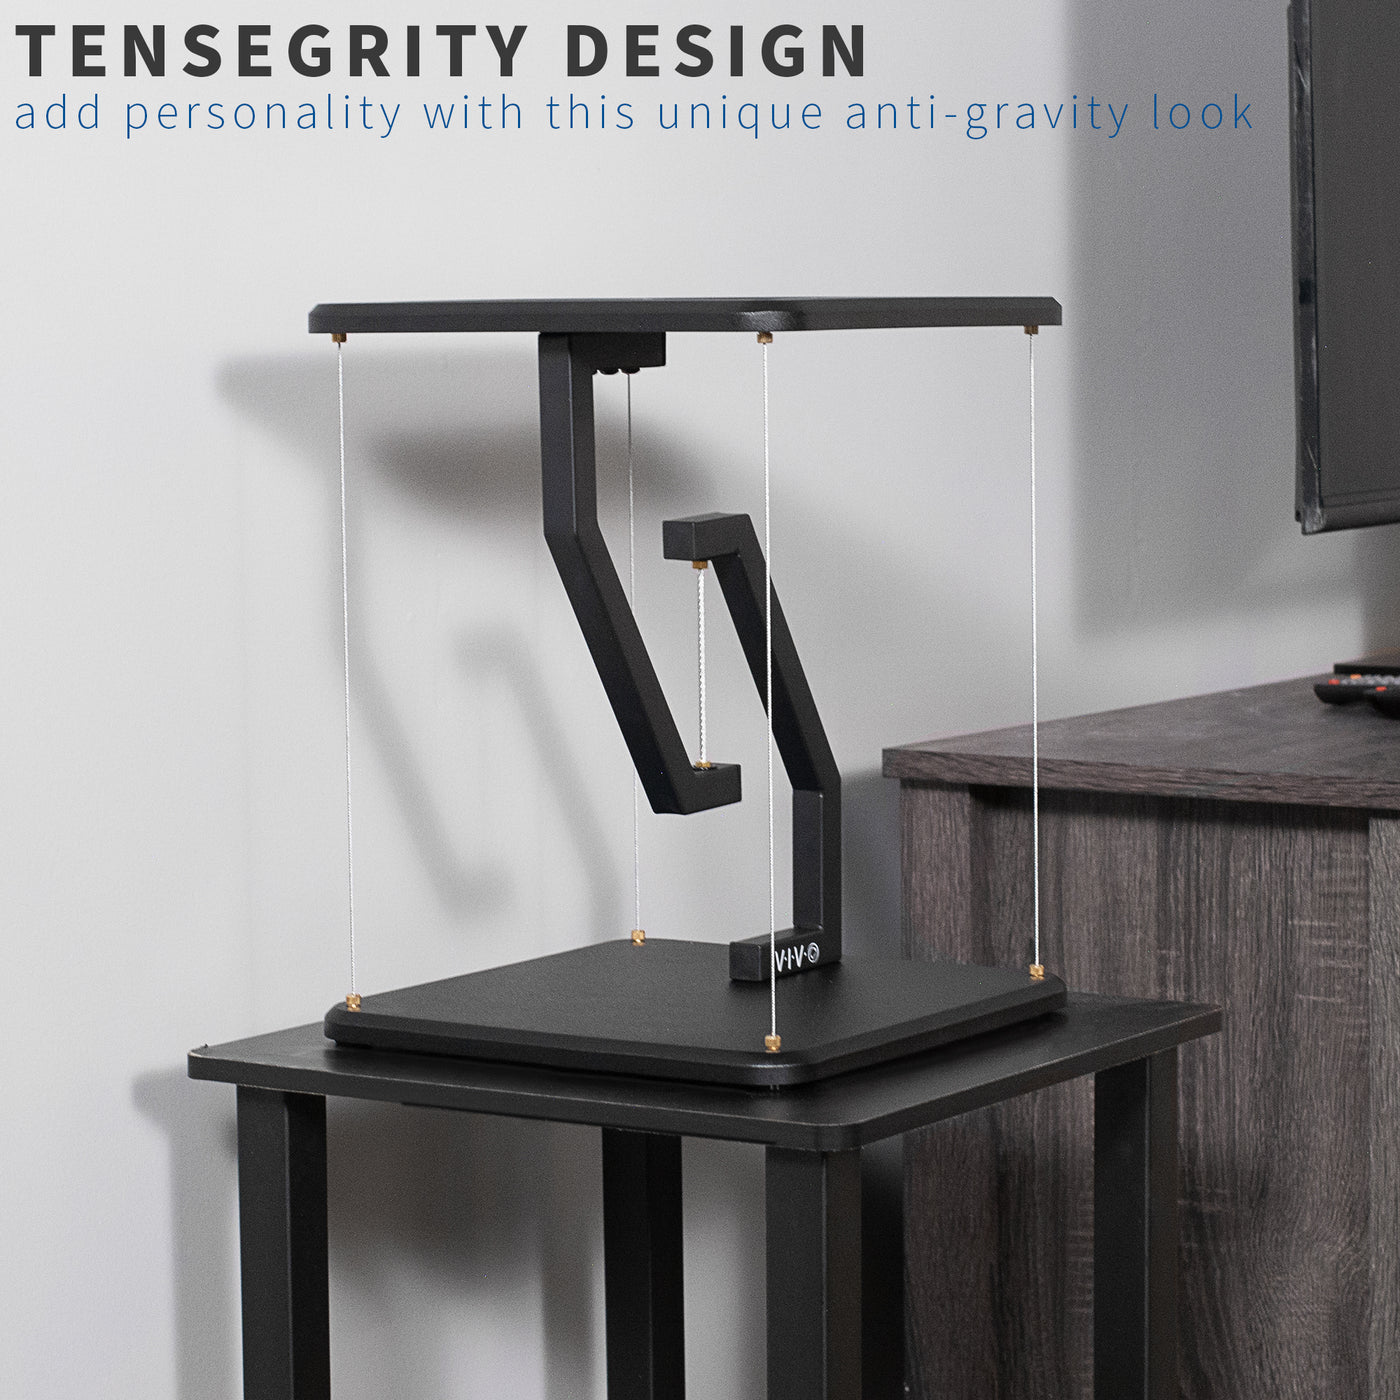 Unique tensegrity design of modern speaker stands from VIVO.